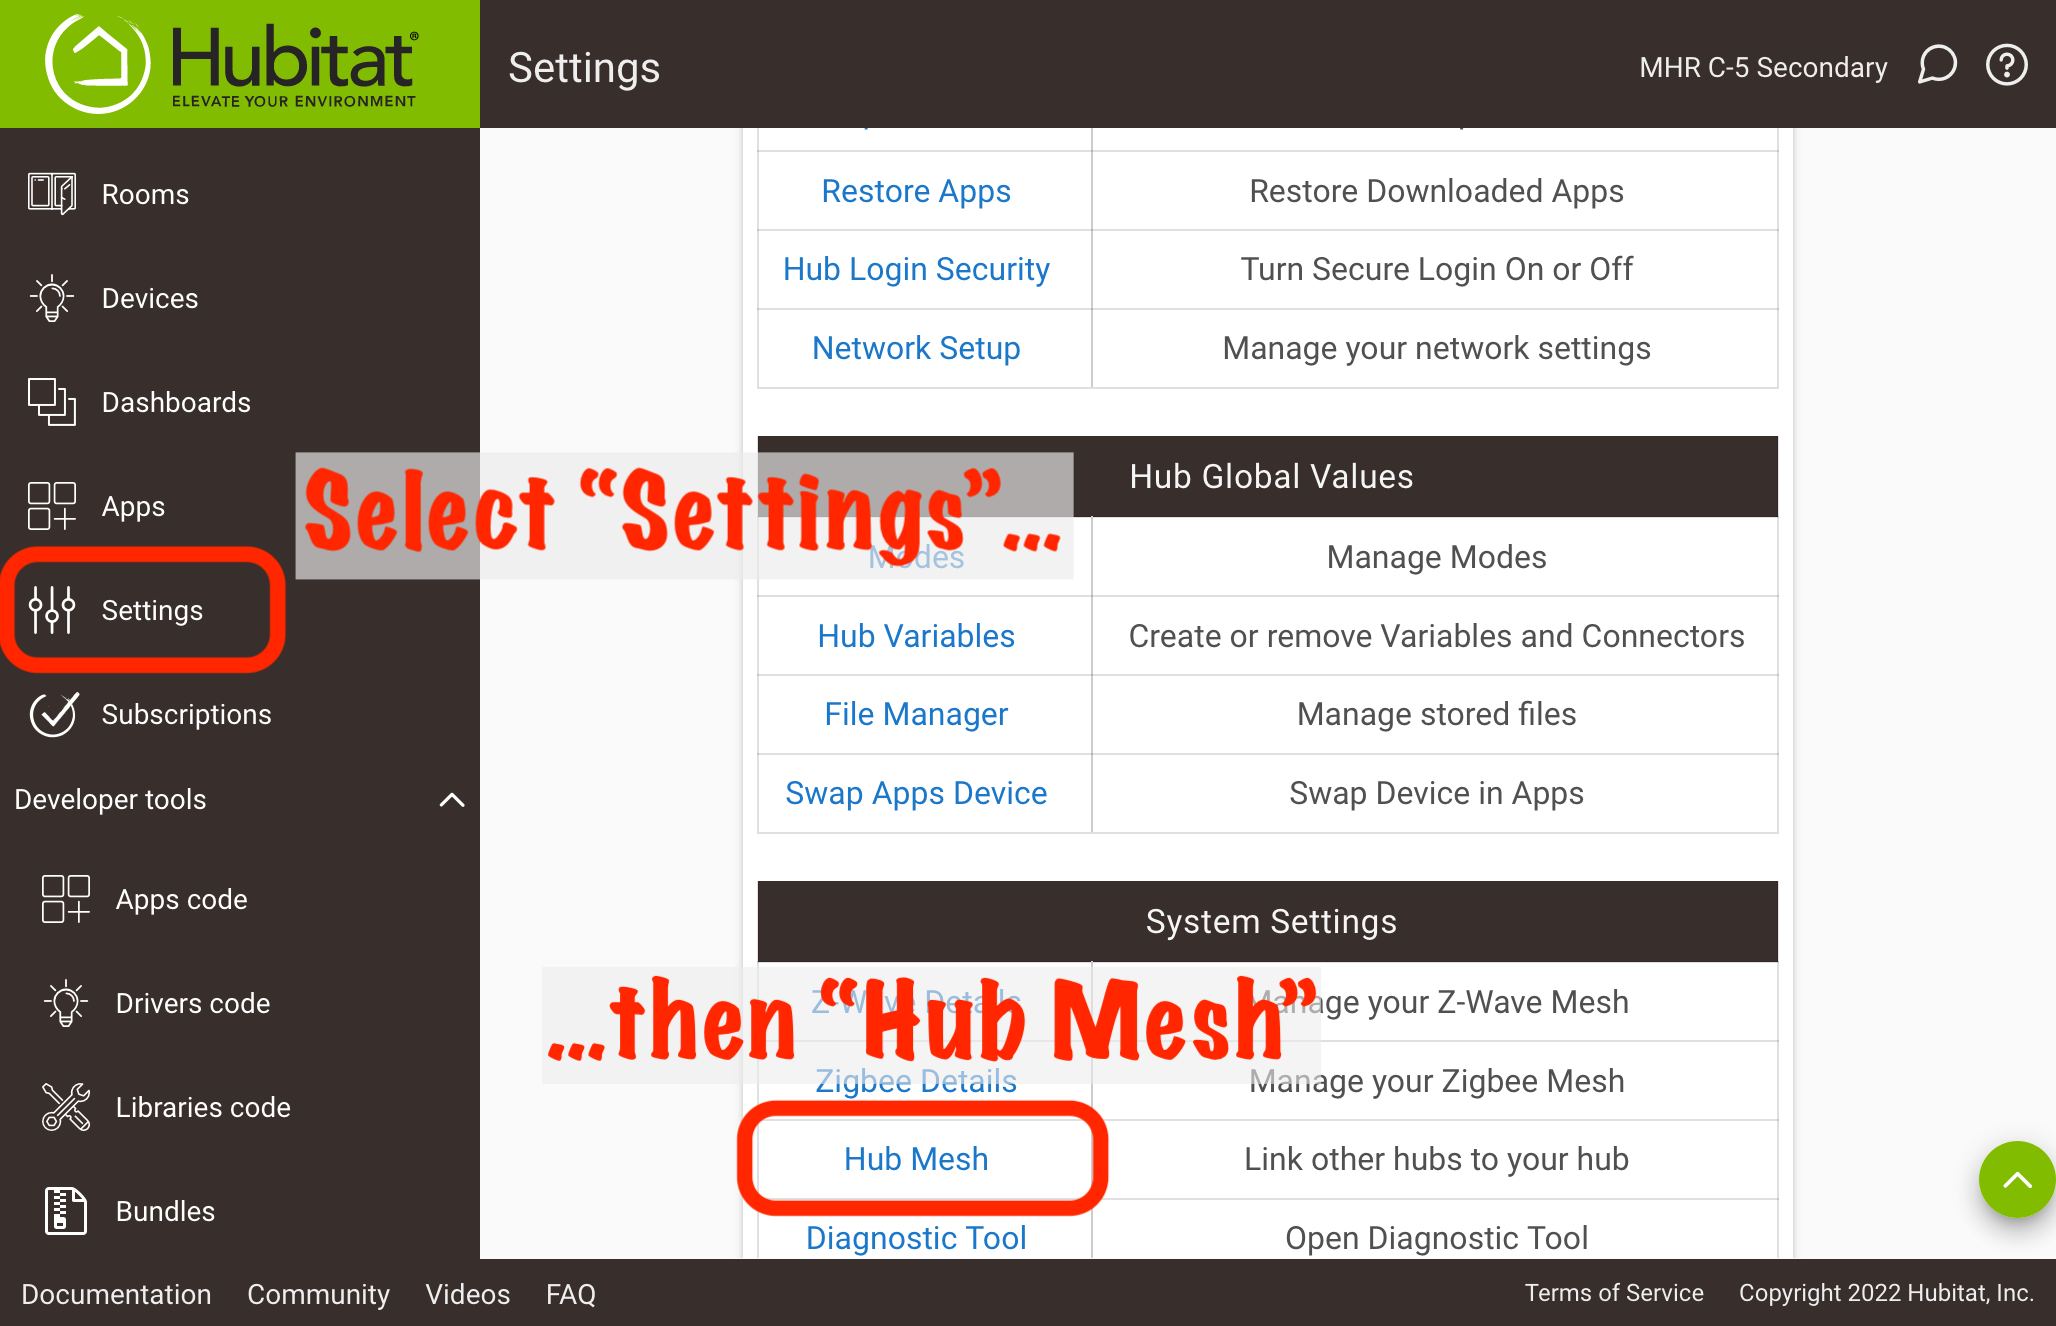 Screenshot: "Hub Mesh" option in "Settings" page